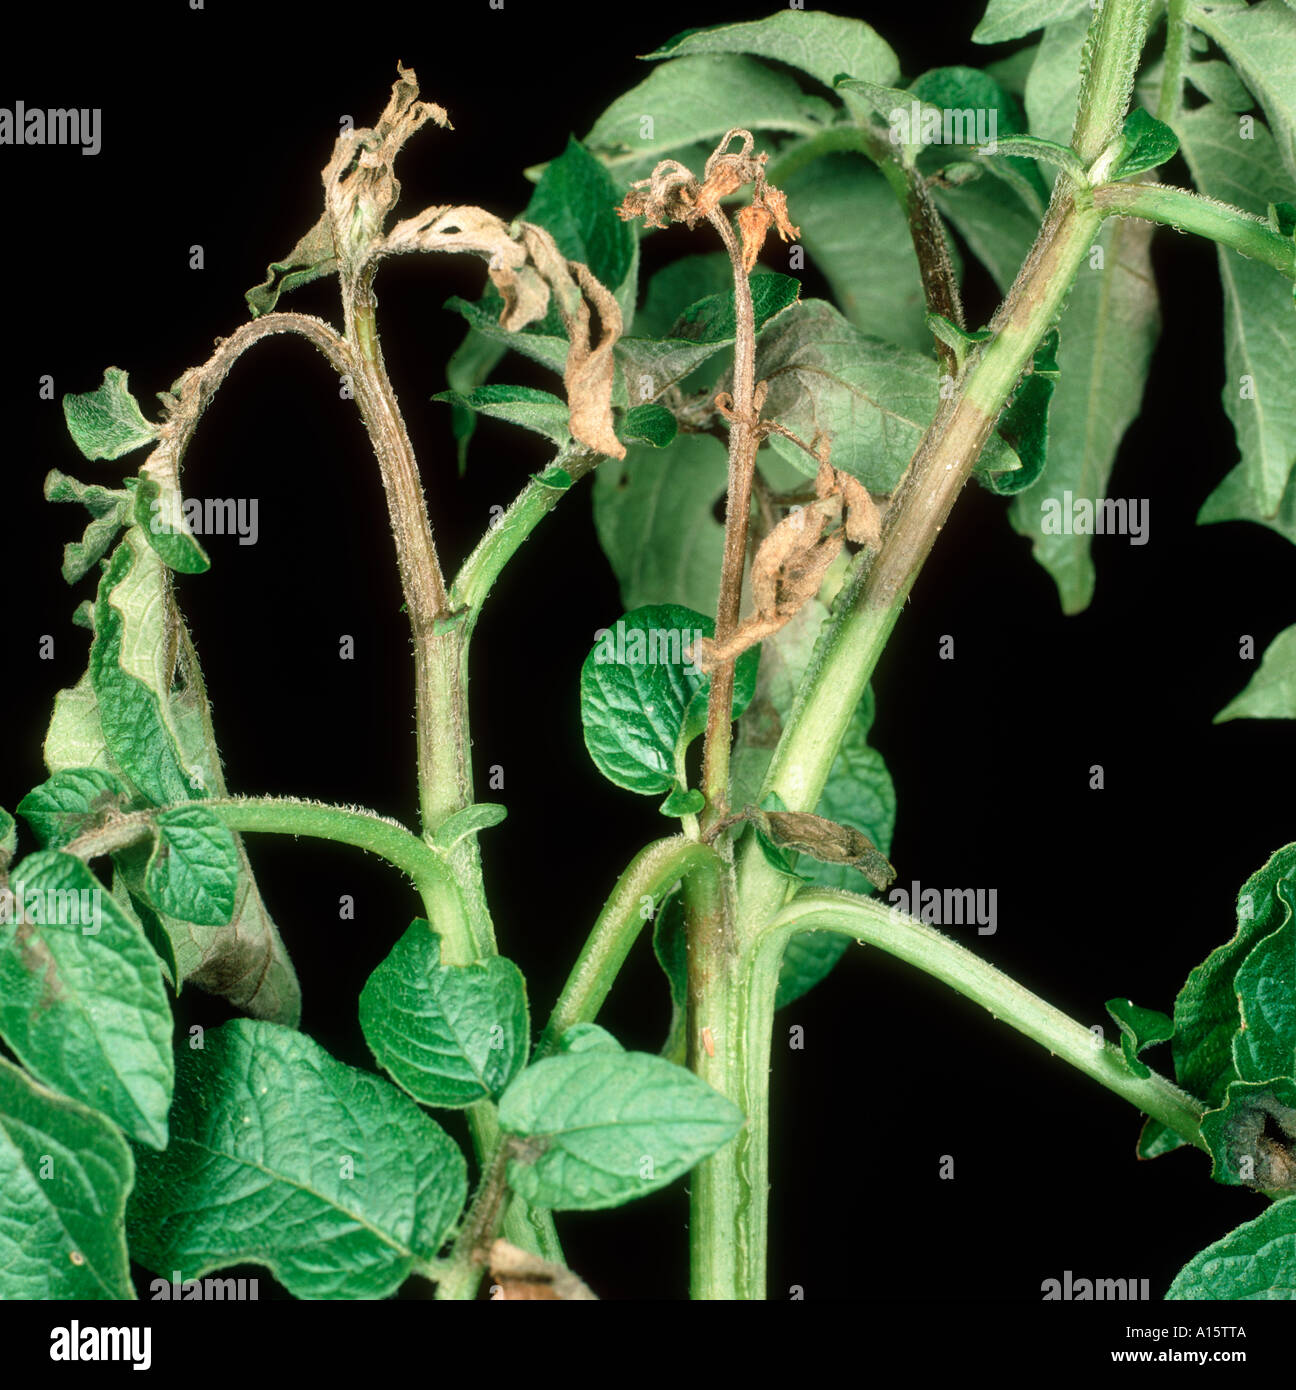 Potato late blight Phytophthora infestans on potato leaves and stem Stock Photo